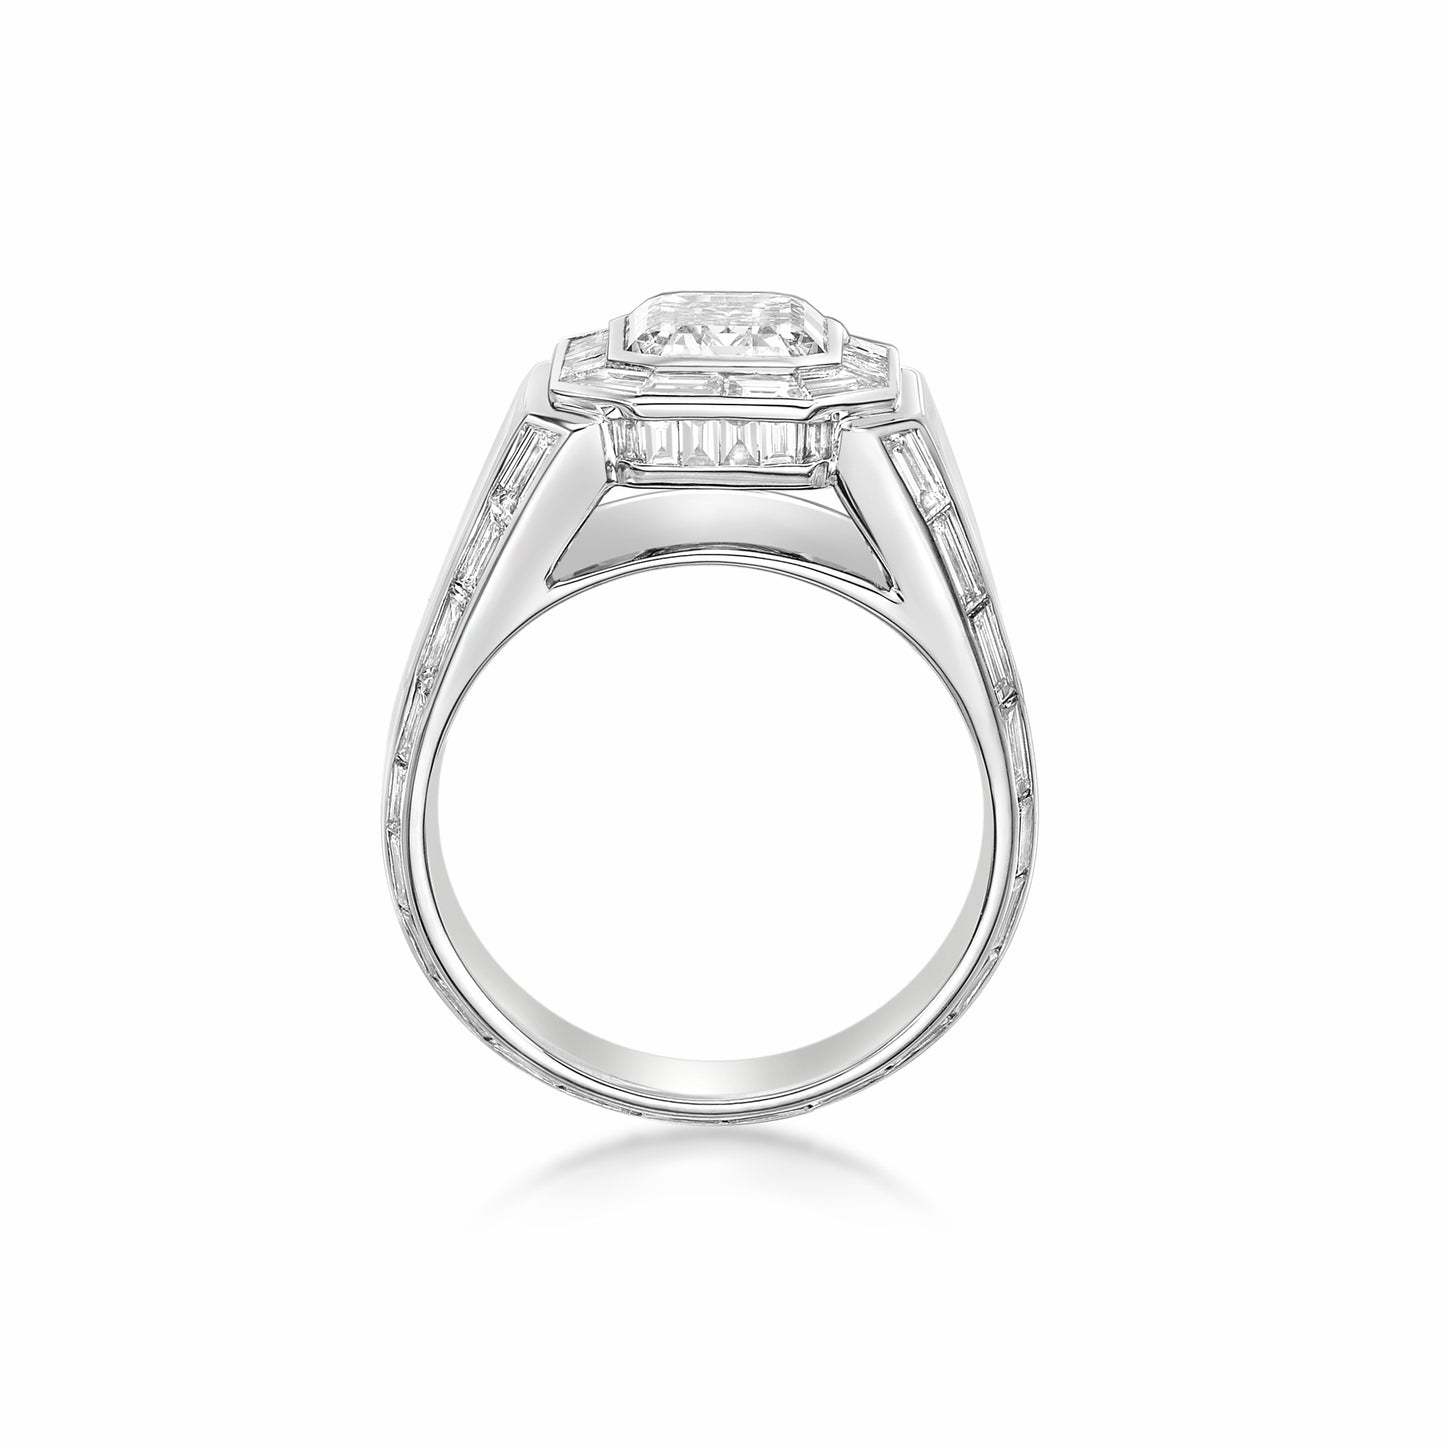 Men's Ring- 3.01ct Emerald cut diamond in a Platinum Baguette Diamond Halo setting with custom side profile